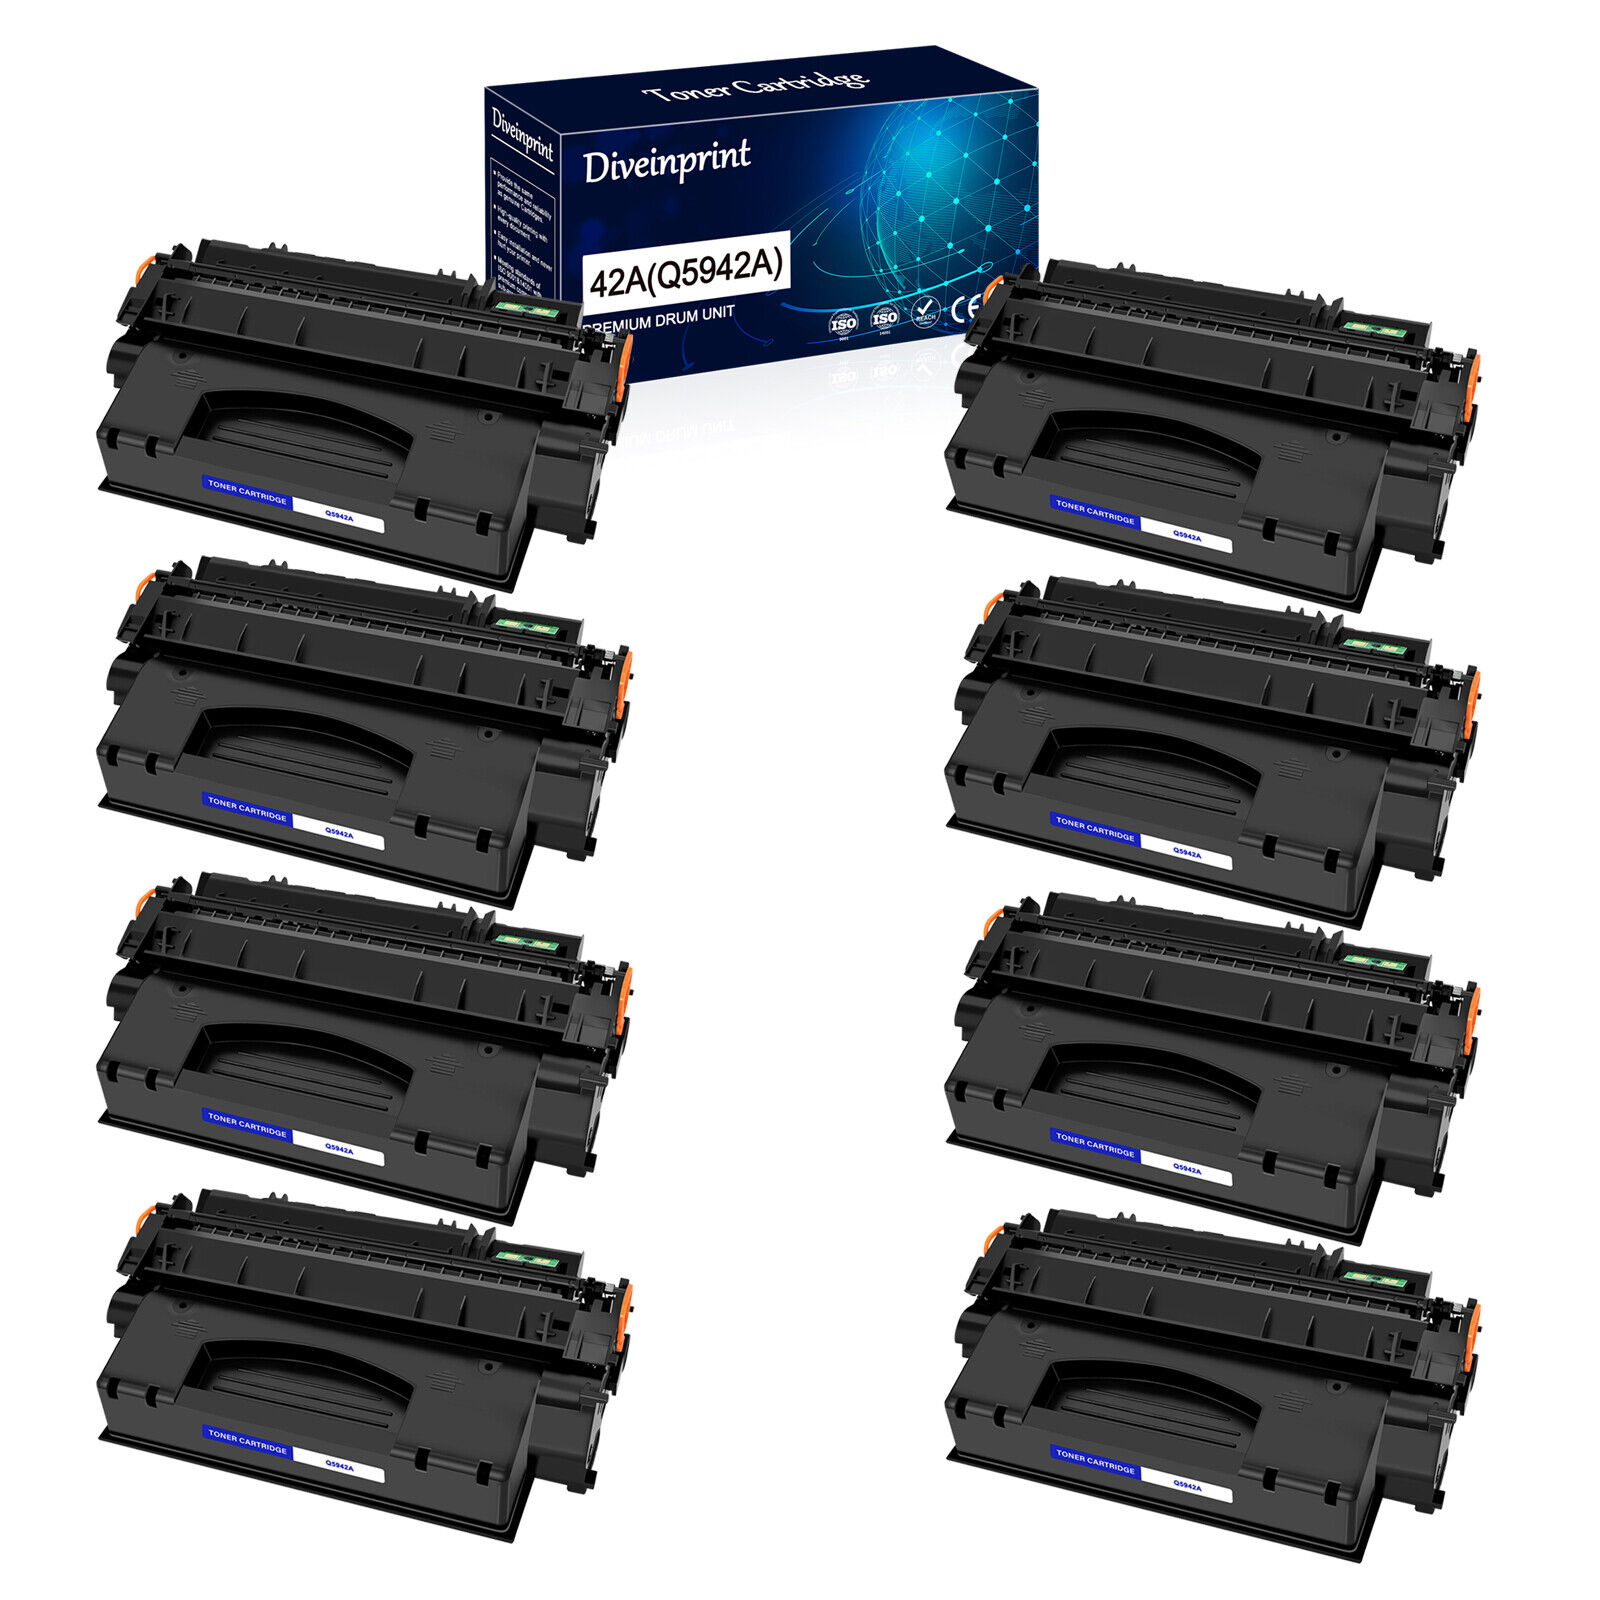 8PK Q5942A High Yield Toner Cartridge For HP 42A LaserJet 4250 4250n 4250tn 4200